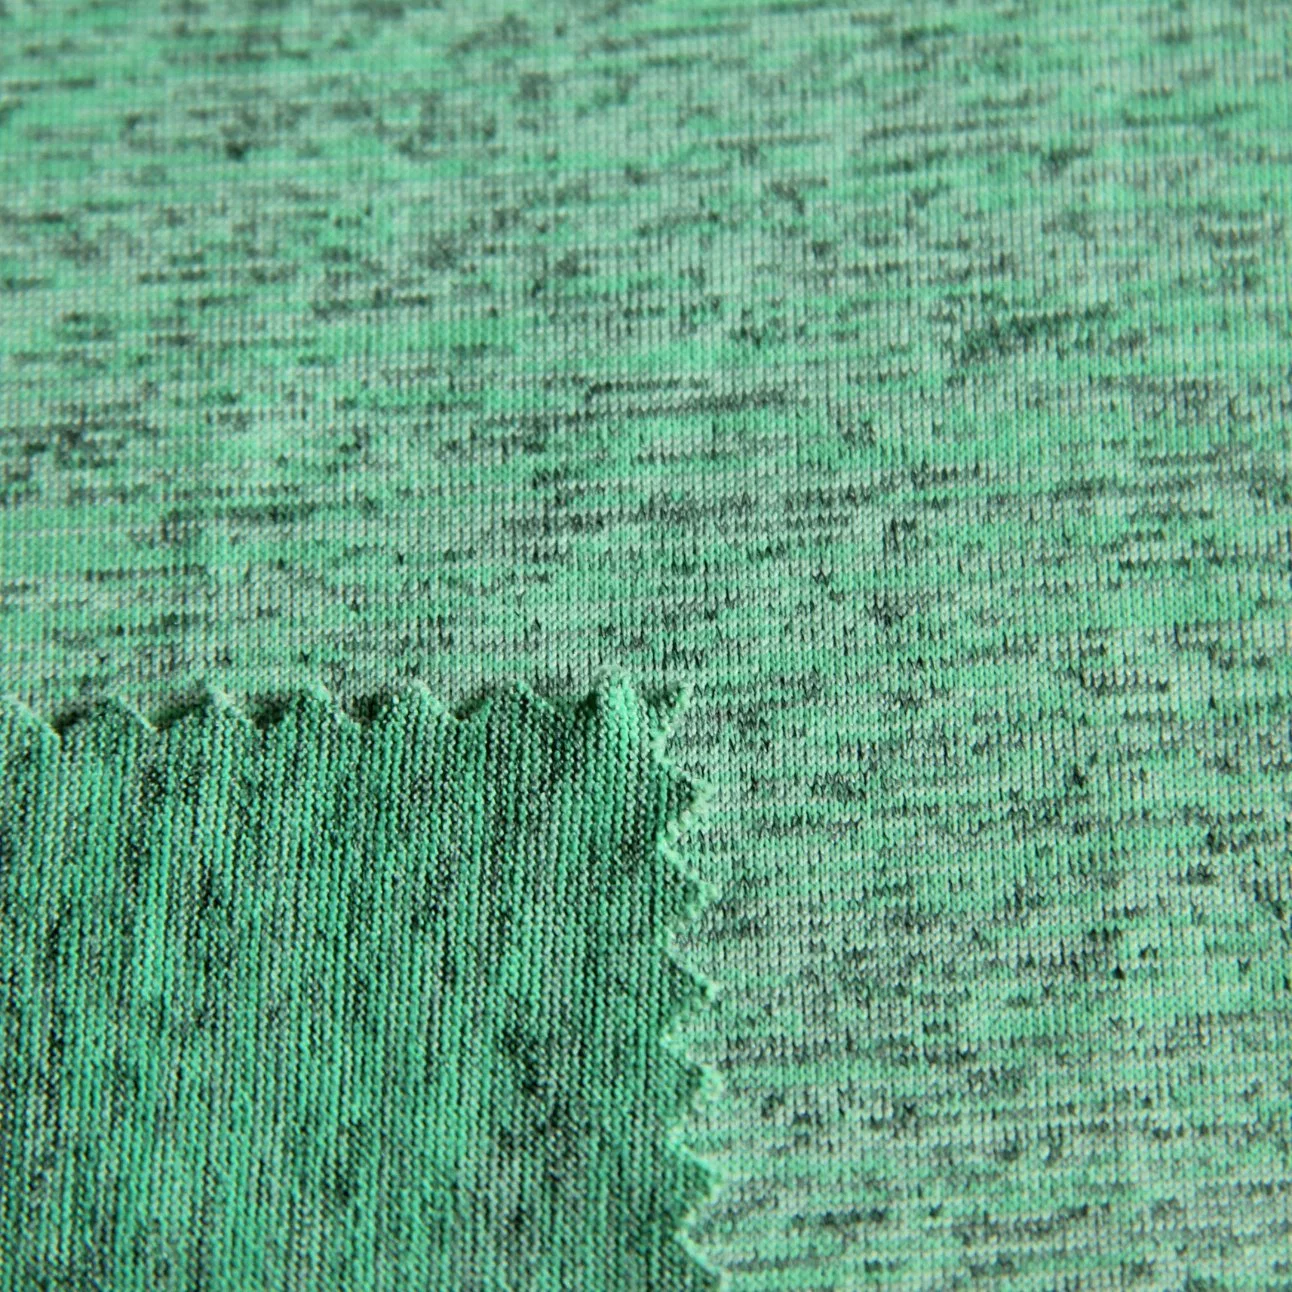 Nt Nylon/Polyester Green Knit Melange Cotton Like Single Jersey Fabric Silk Touch for Top/Underwear/Sportswear